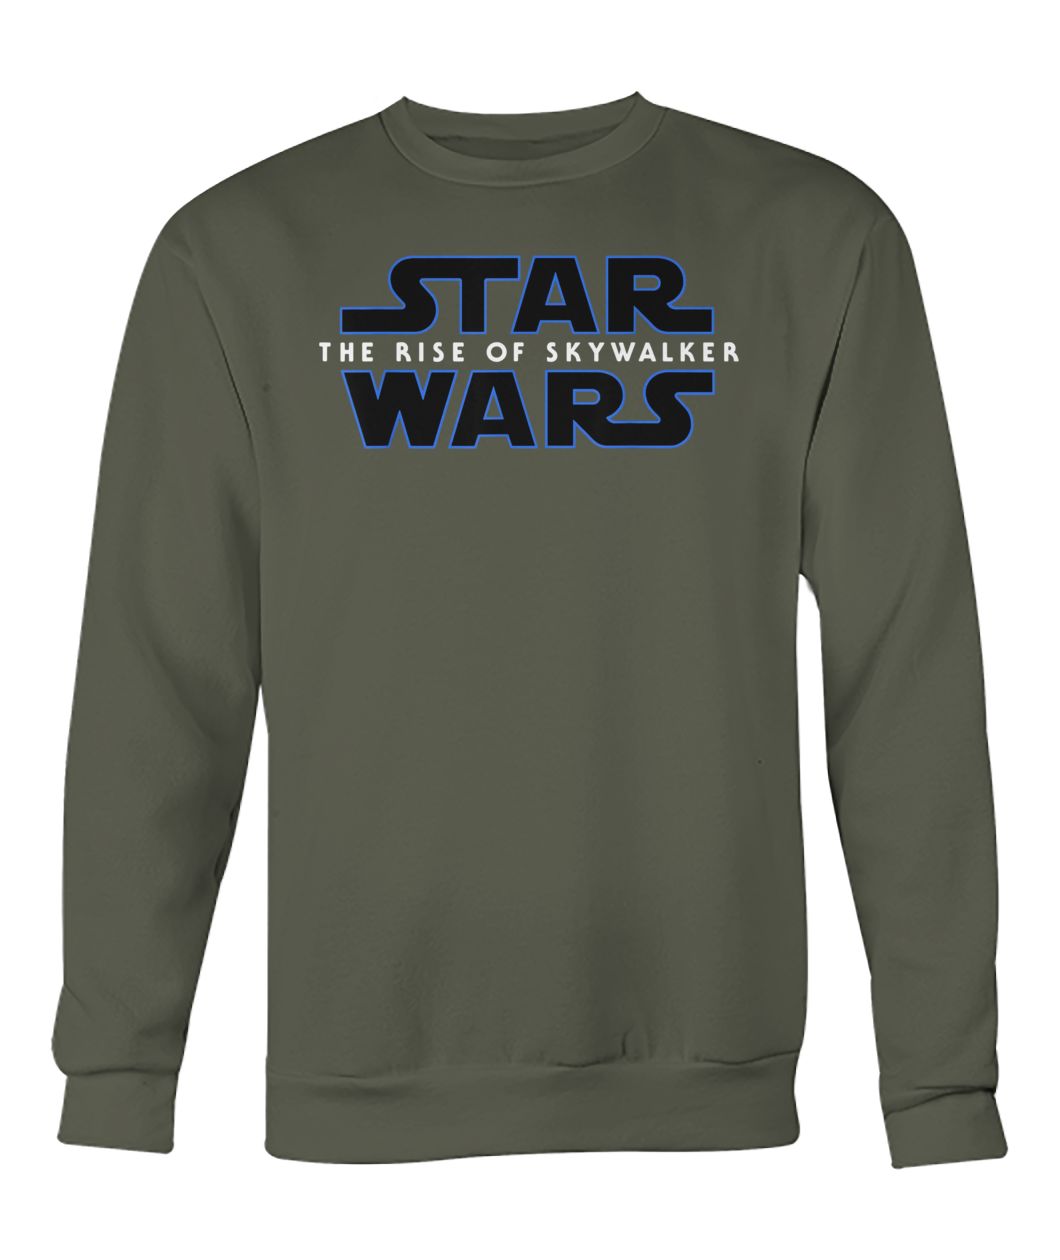 Star wars episode IX the rise of skywalker logo crew neck sweatshirt